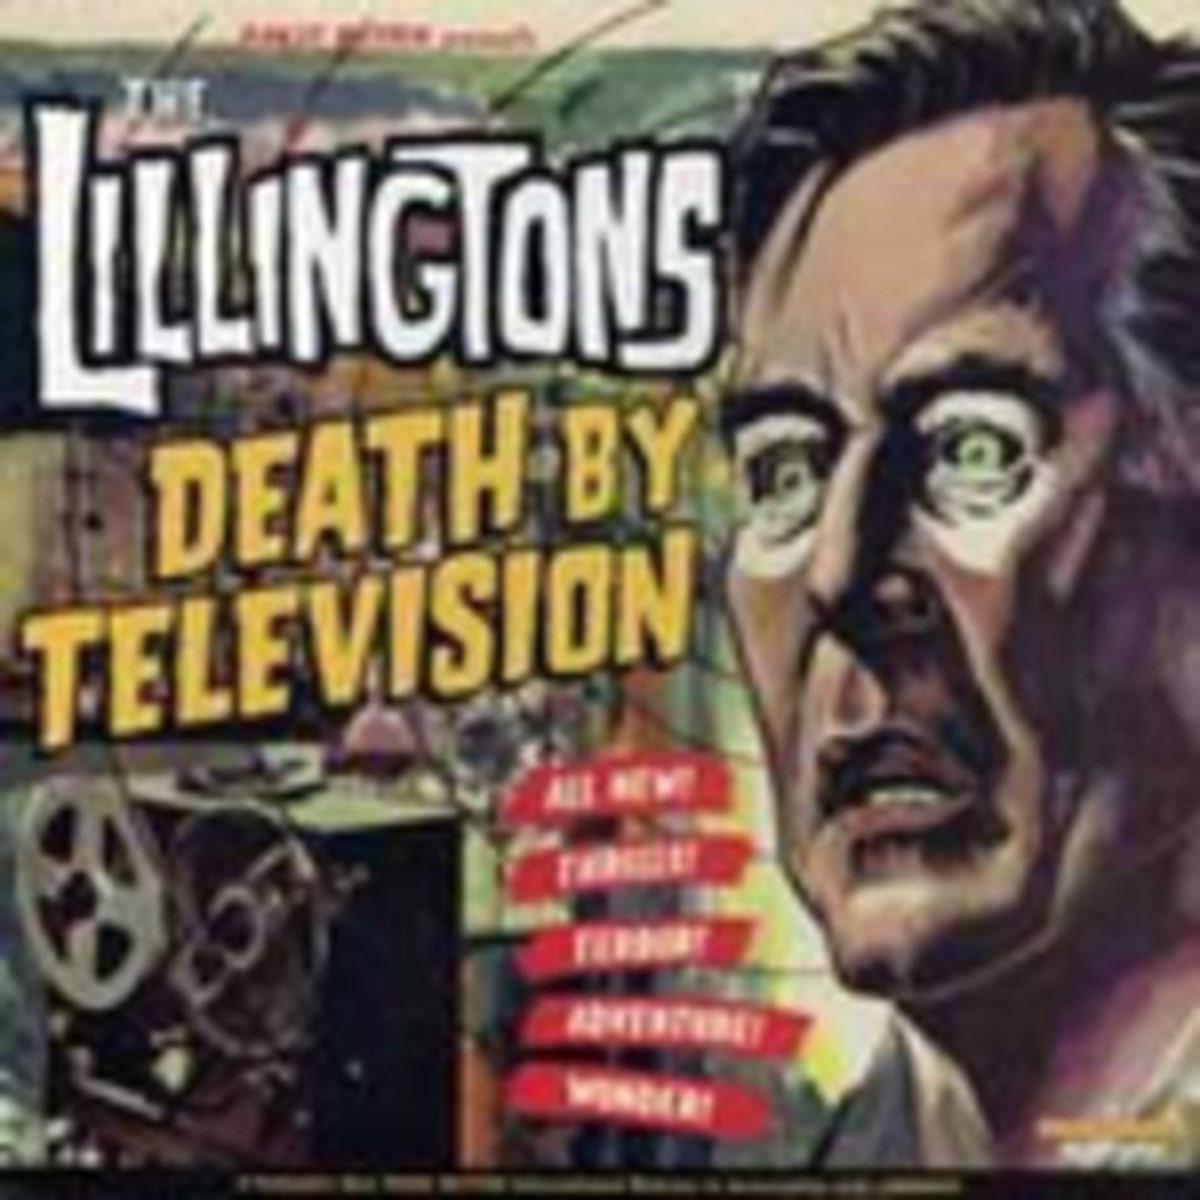 The Lillingtons - Don't Trust The Humanoids